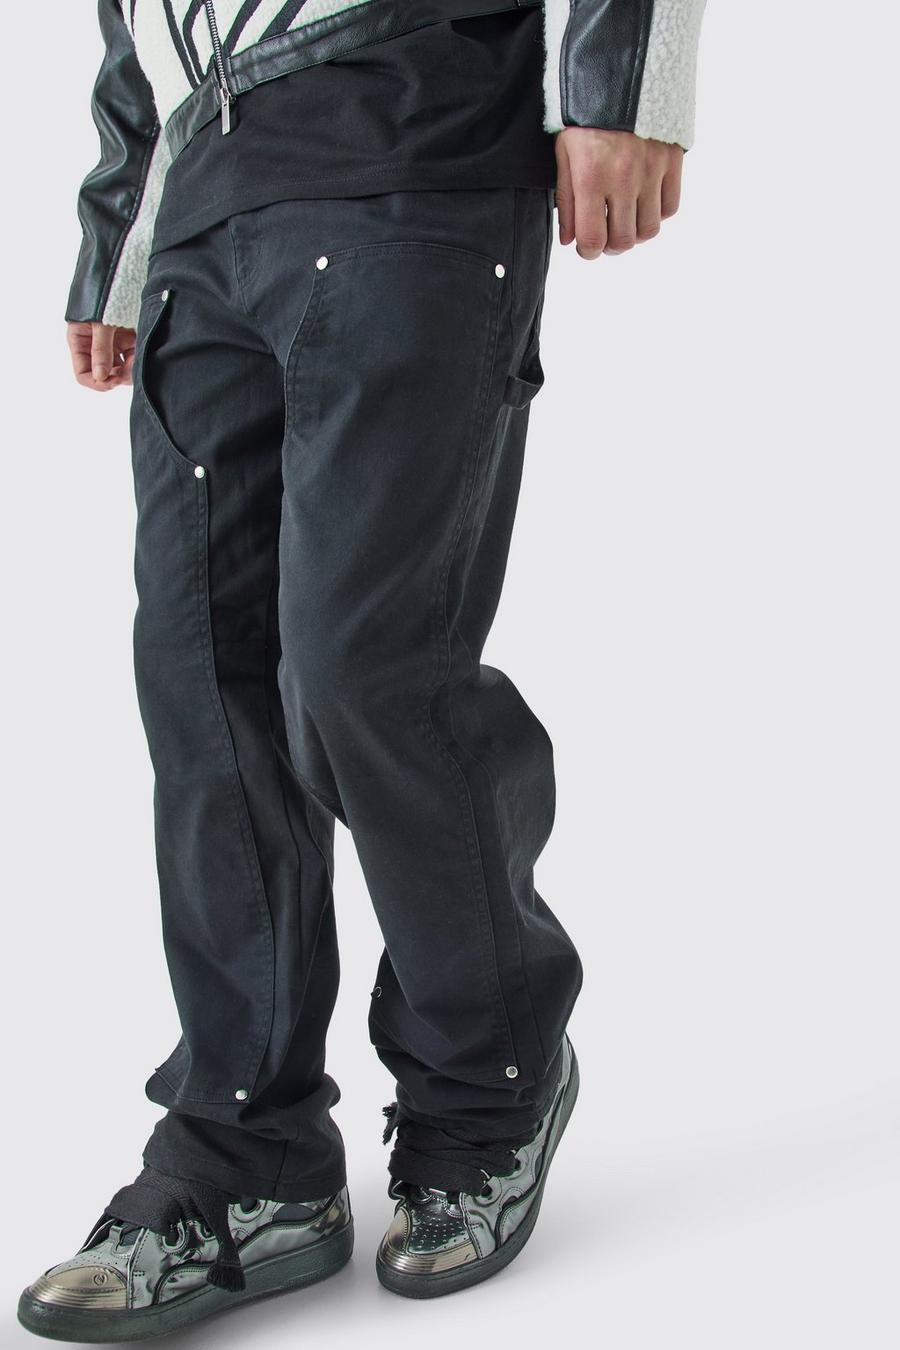 Tall - Pantalon charpentier large à taille fixe, Black